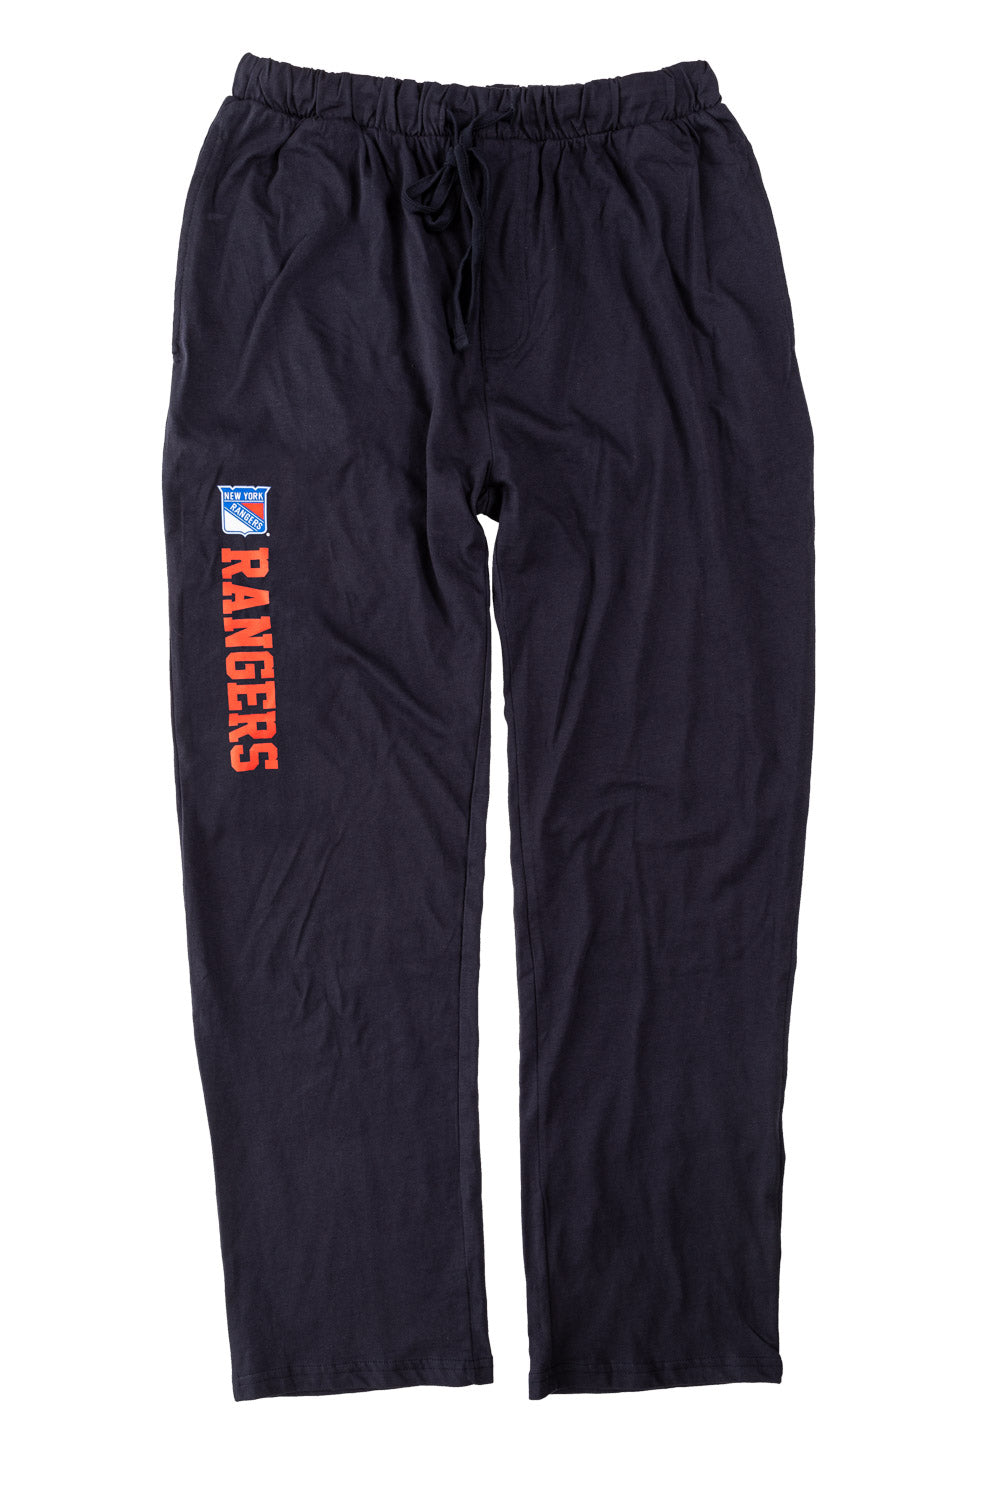 New York Rangers Men's Cotton Jersey Pants